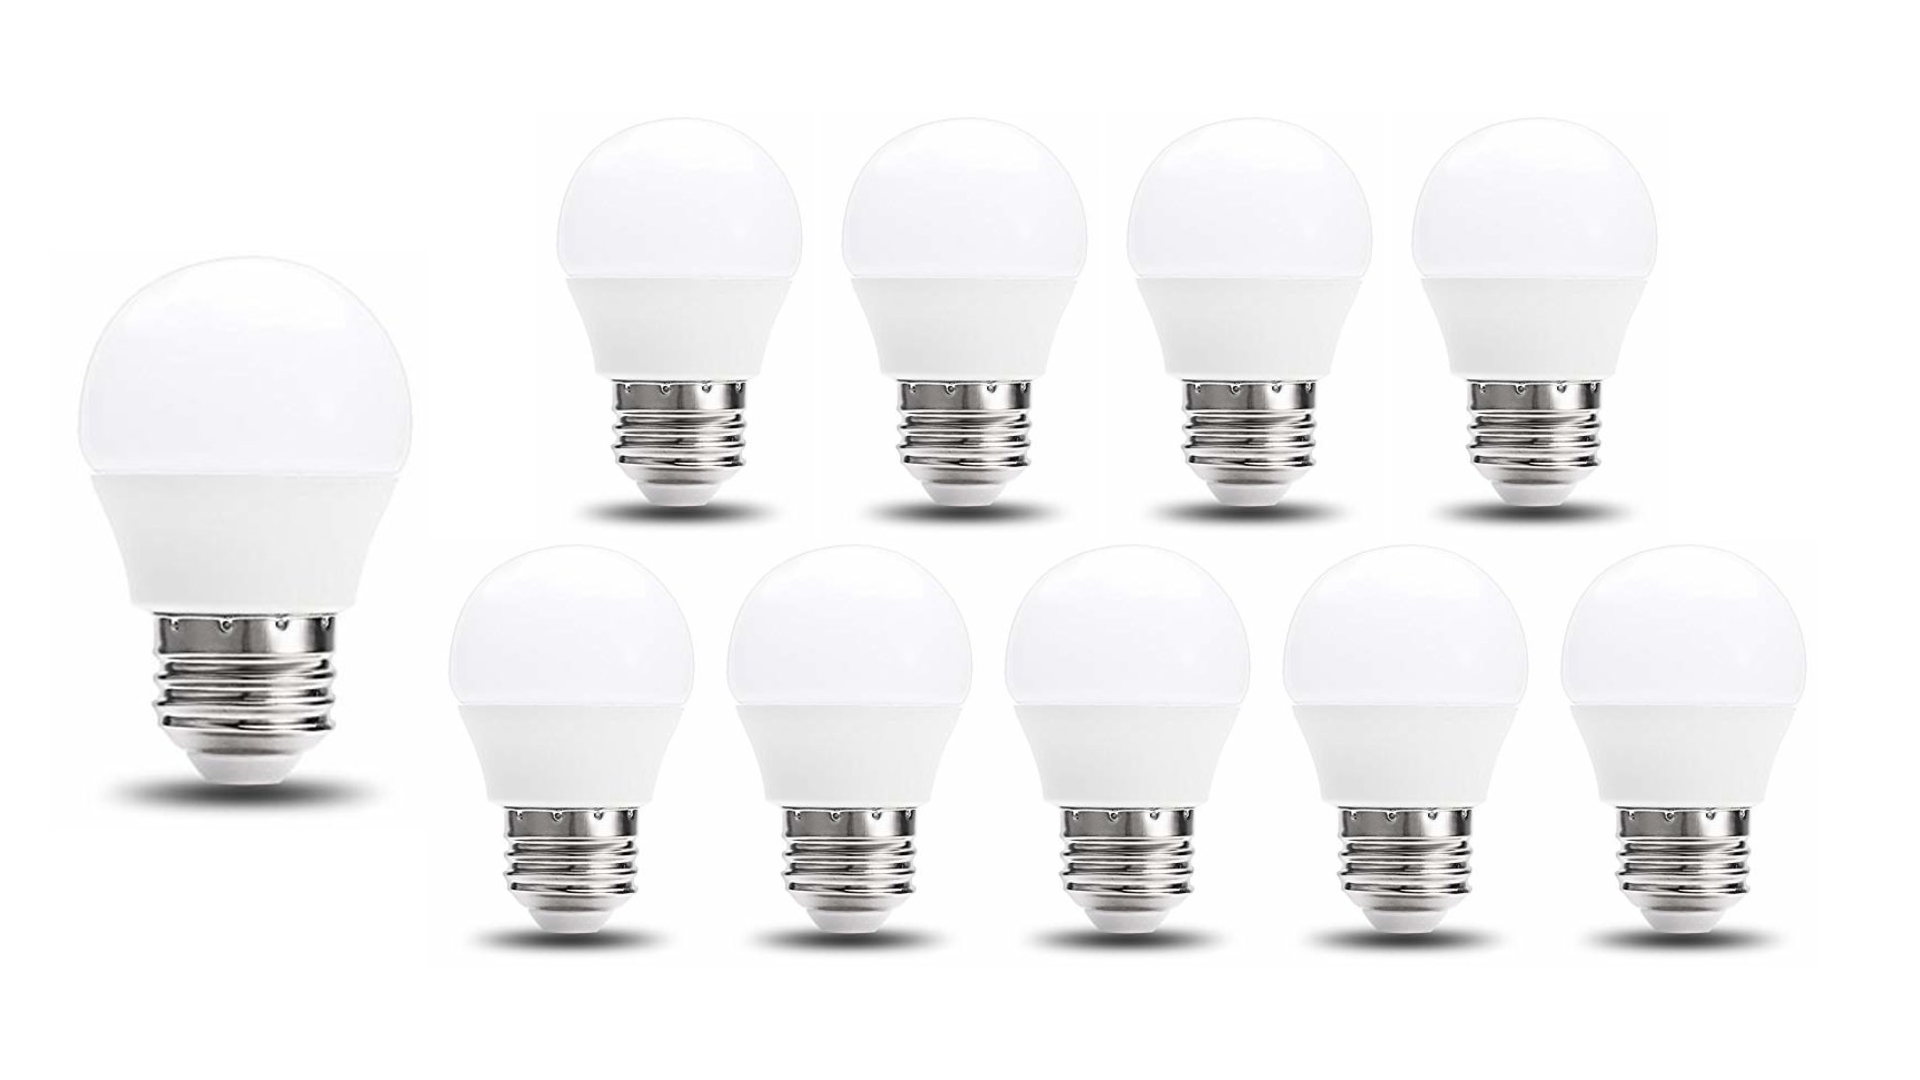 Geweldig Sinds Orthodox Voordeelpak 10 stuks - E27 LED lamp - 6W vervangt 48W - G45 -  Ledlichtdiscounter.nl